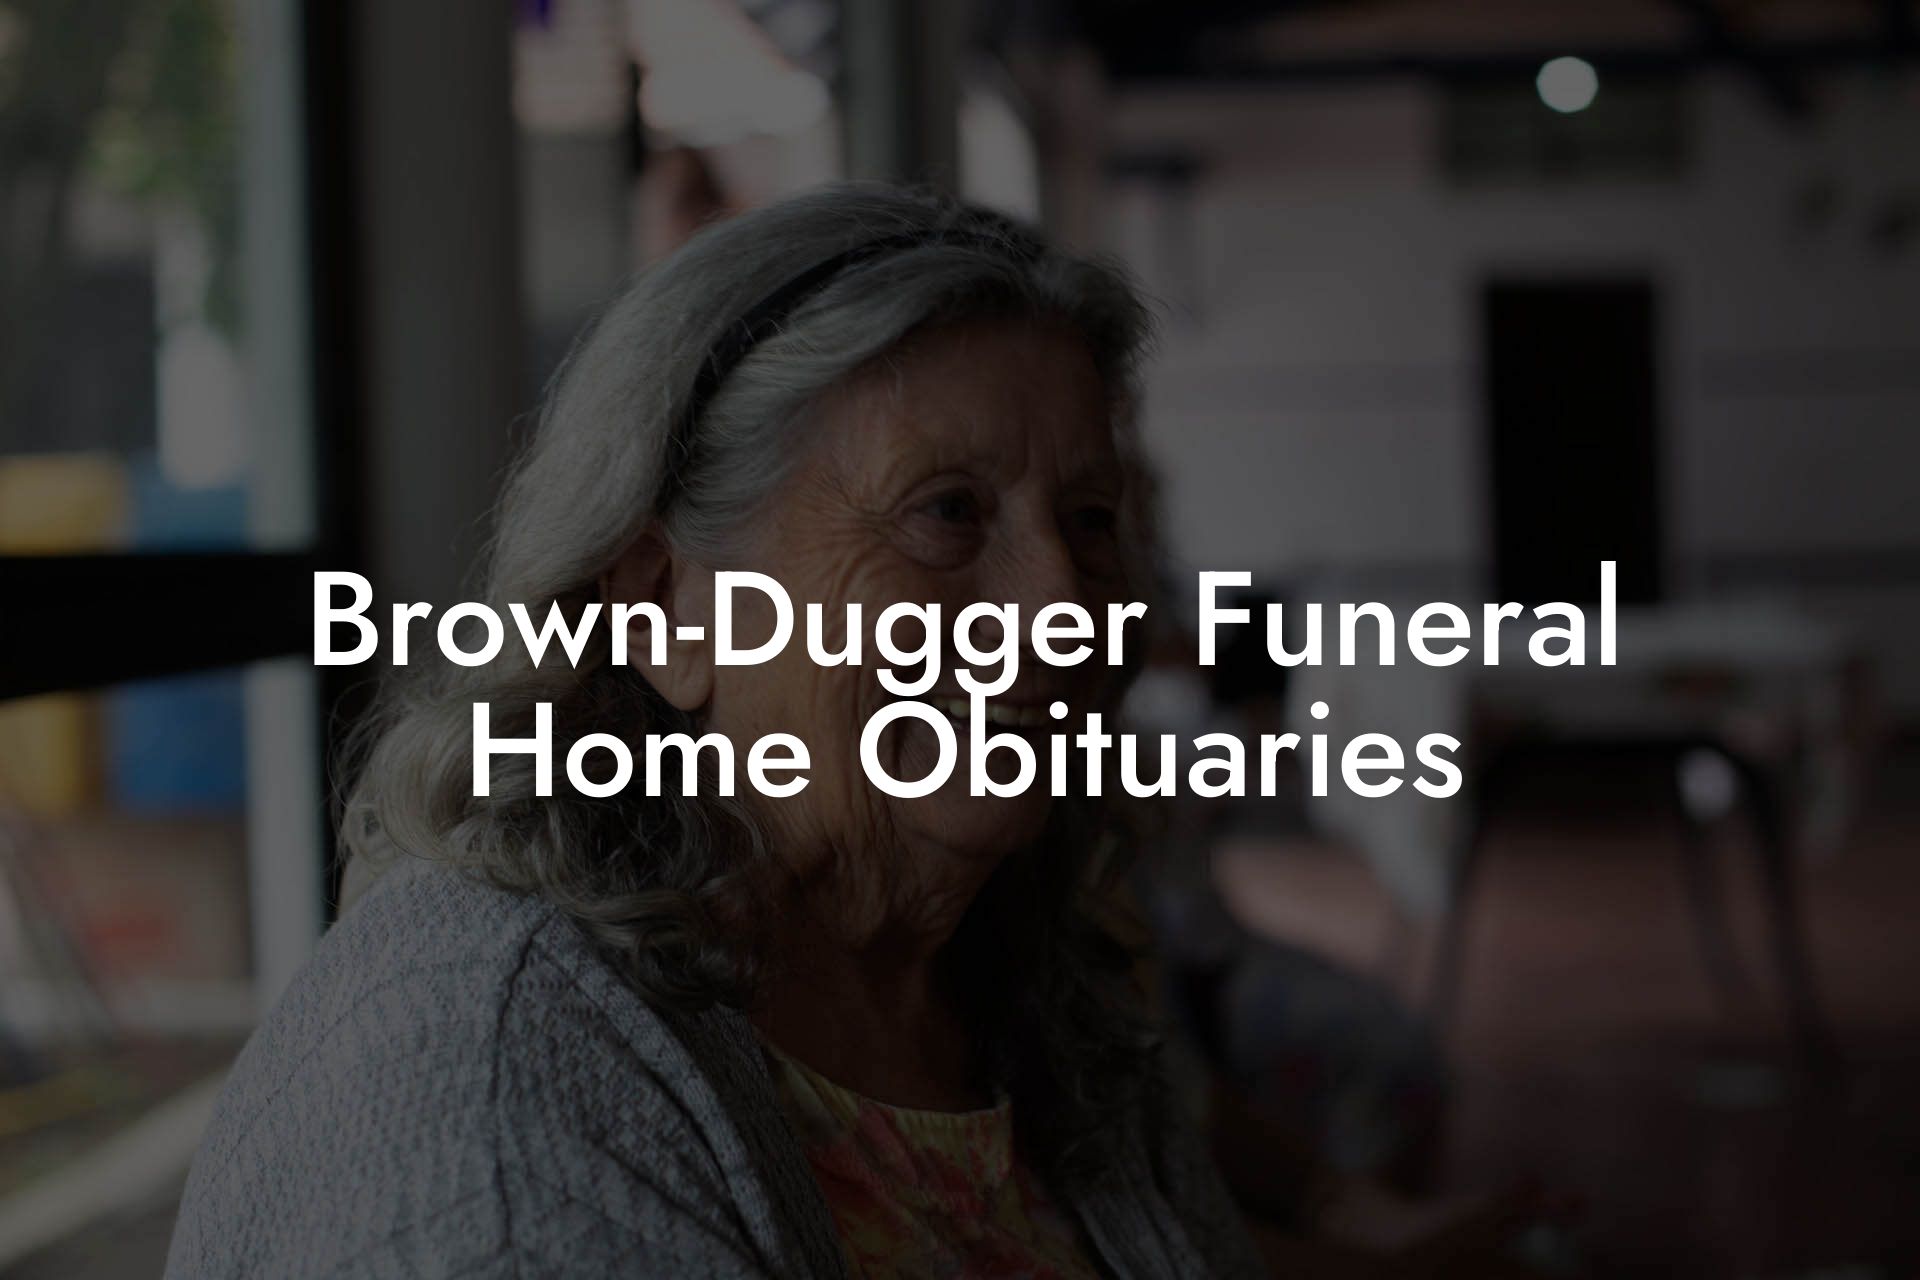 Brown-Dugger Funeral Home Obituaries